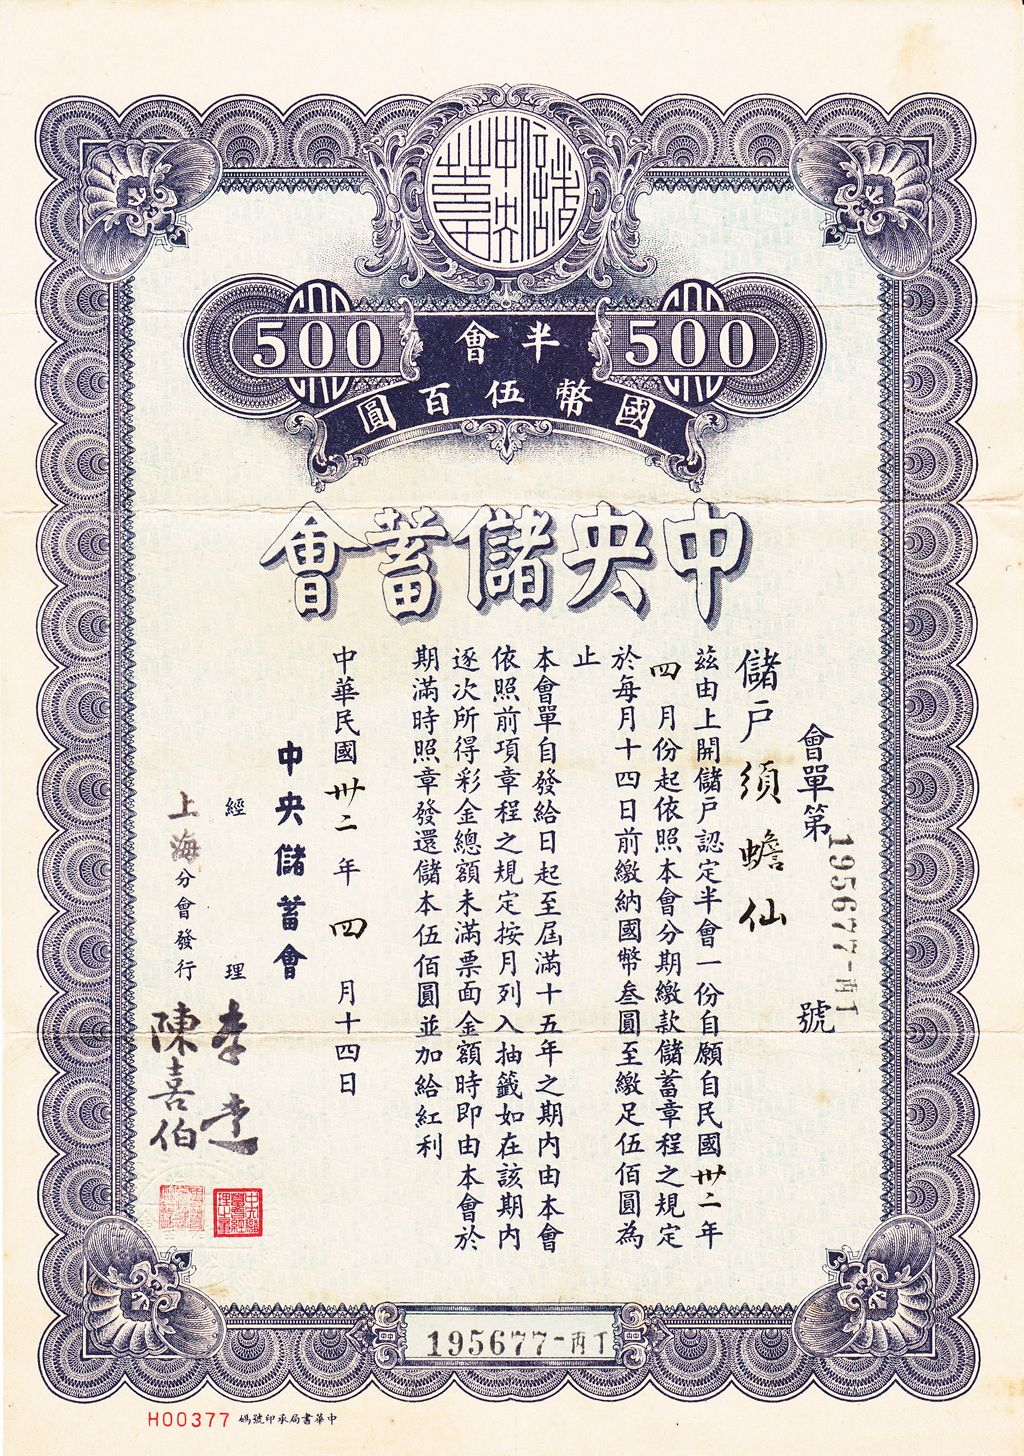 B2736, China Central Savings Society, 500 Dollars (1/2 Lot) Lottery Bond Loan, 1943